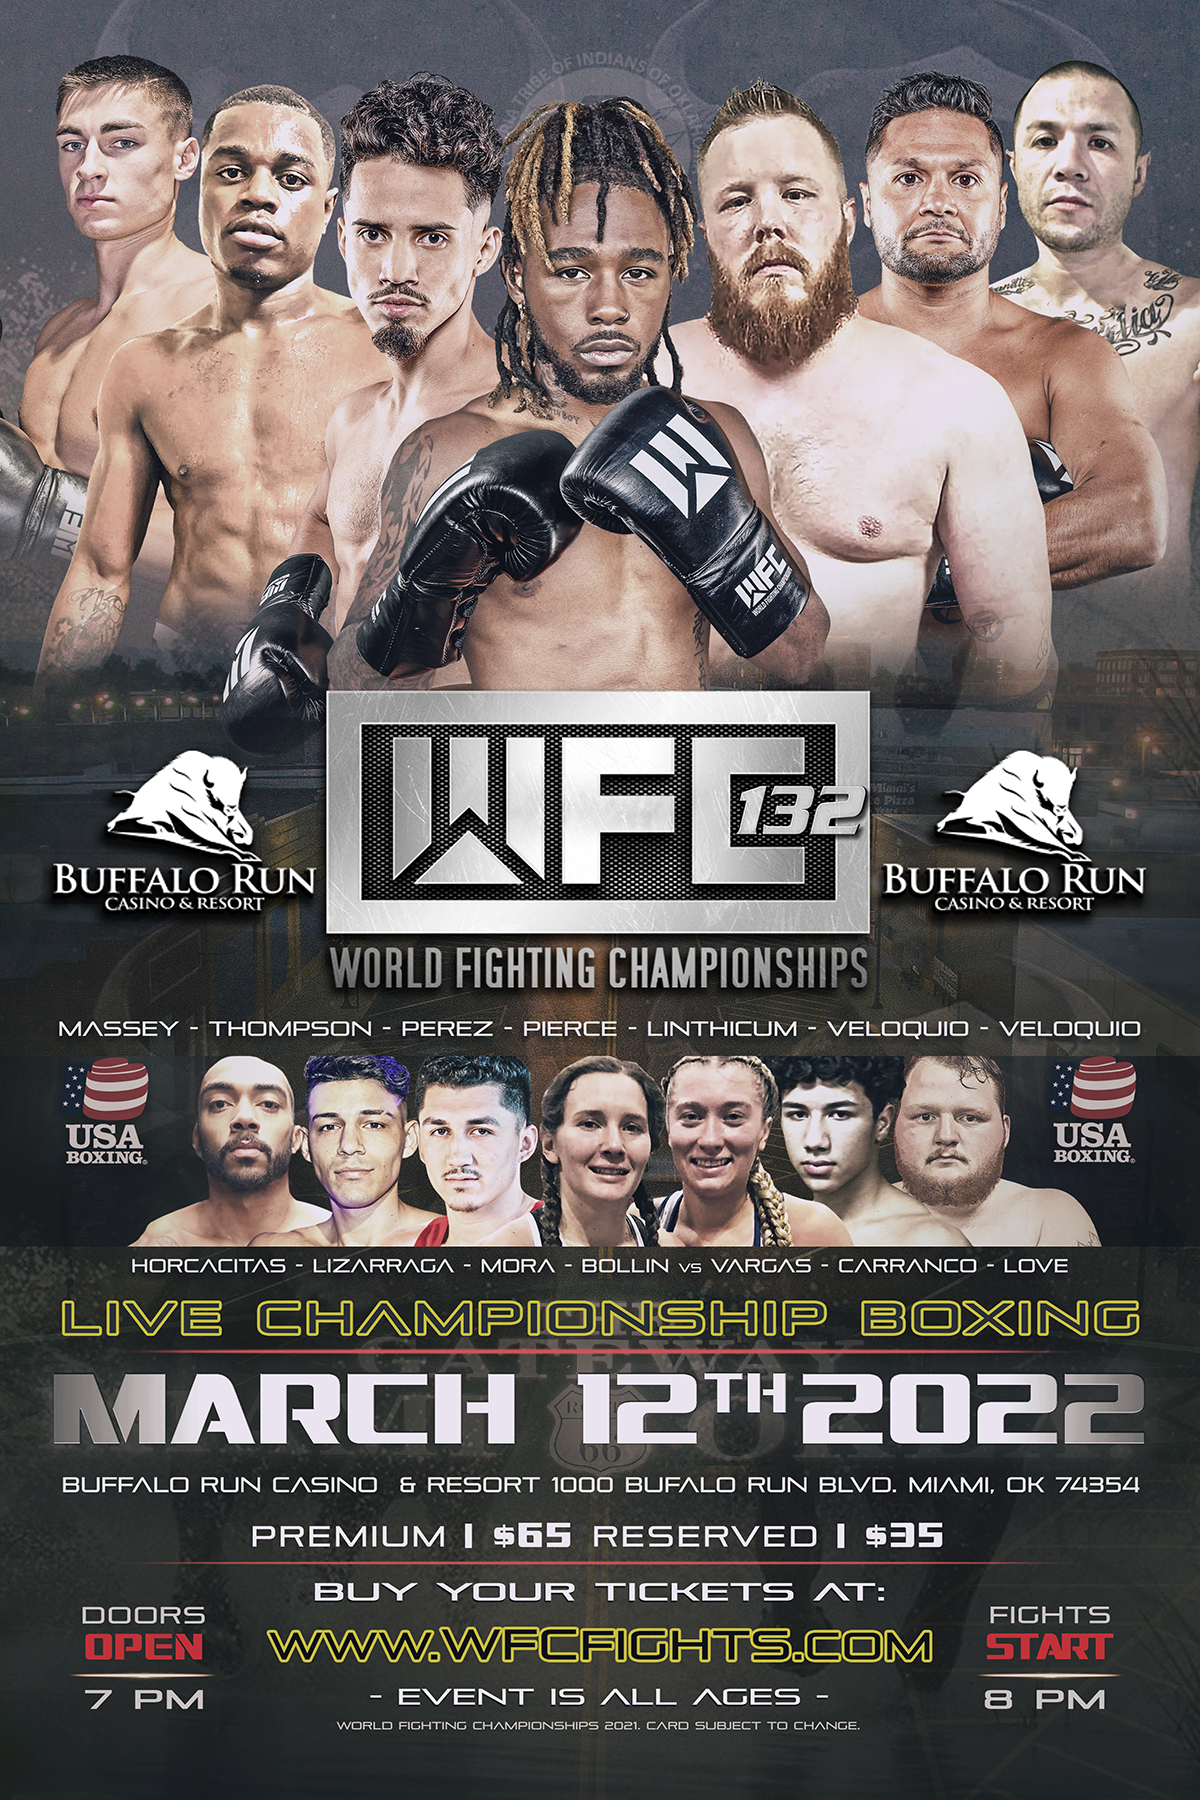 WFC 132 LIVE BOXING Saturday March 12,2022 at Buffalo Run Casino